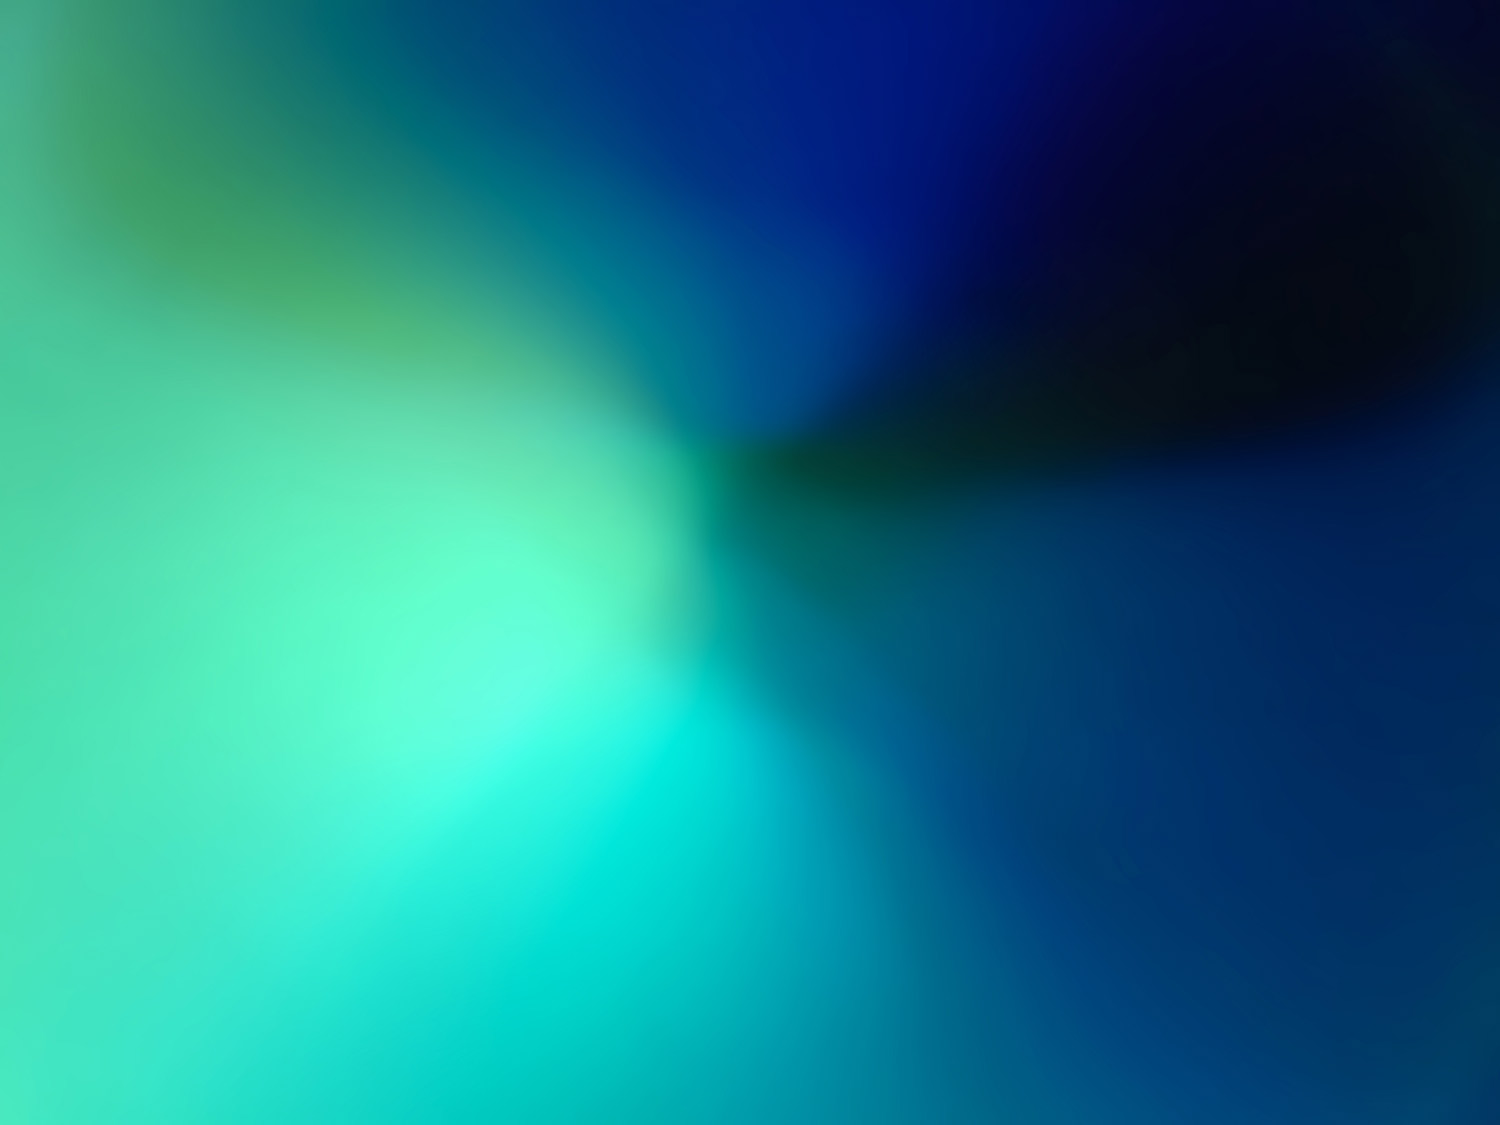 blurred image background